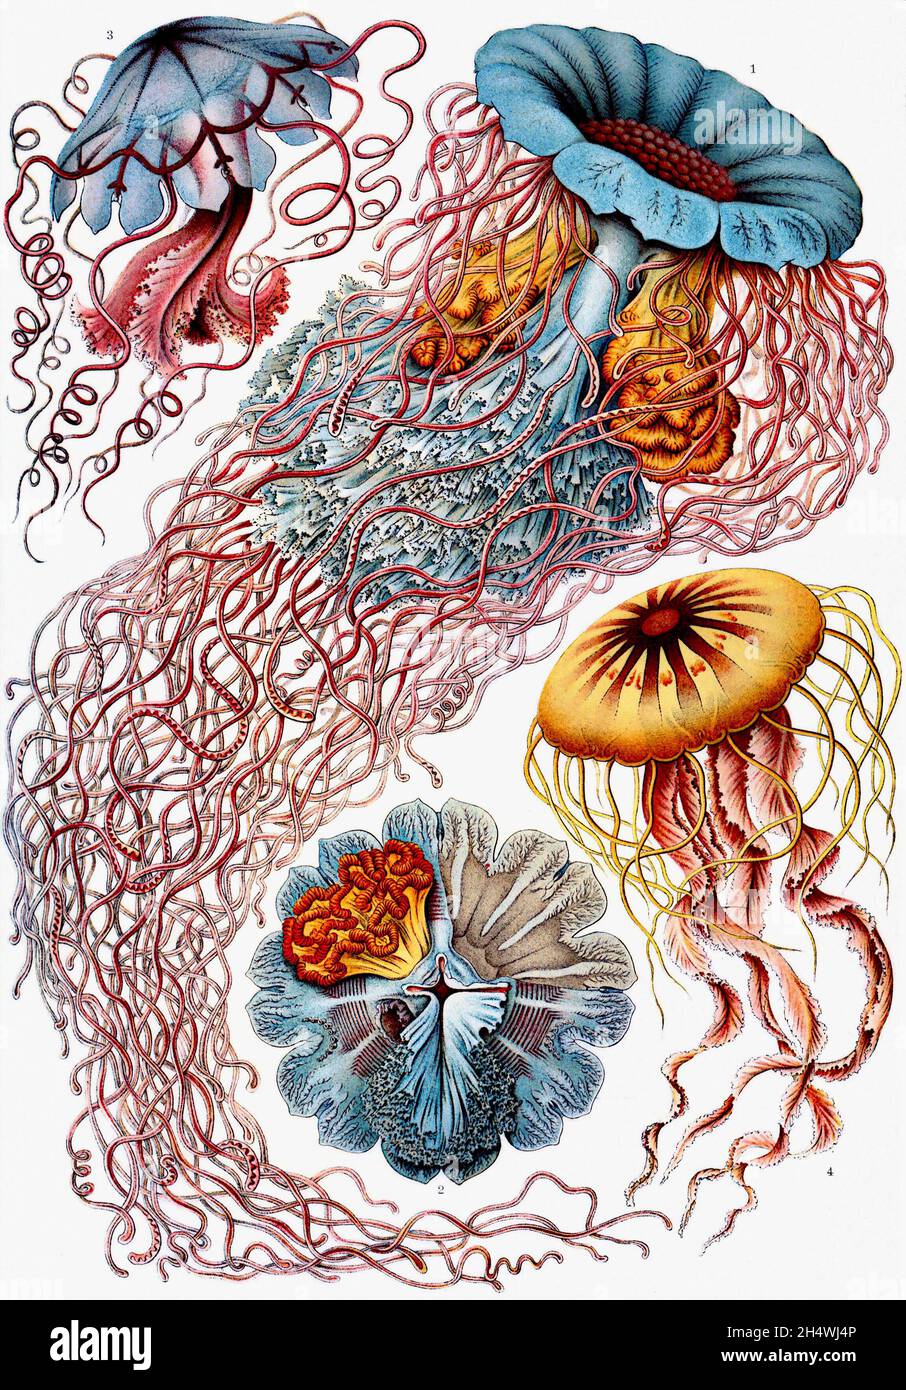 Ernst Haeckel - Discomedusae - 1904 Jellyfish Foto Stock